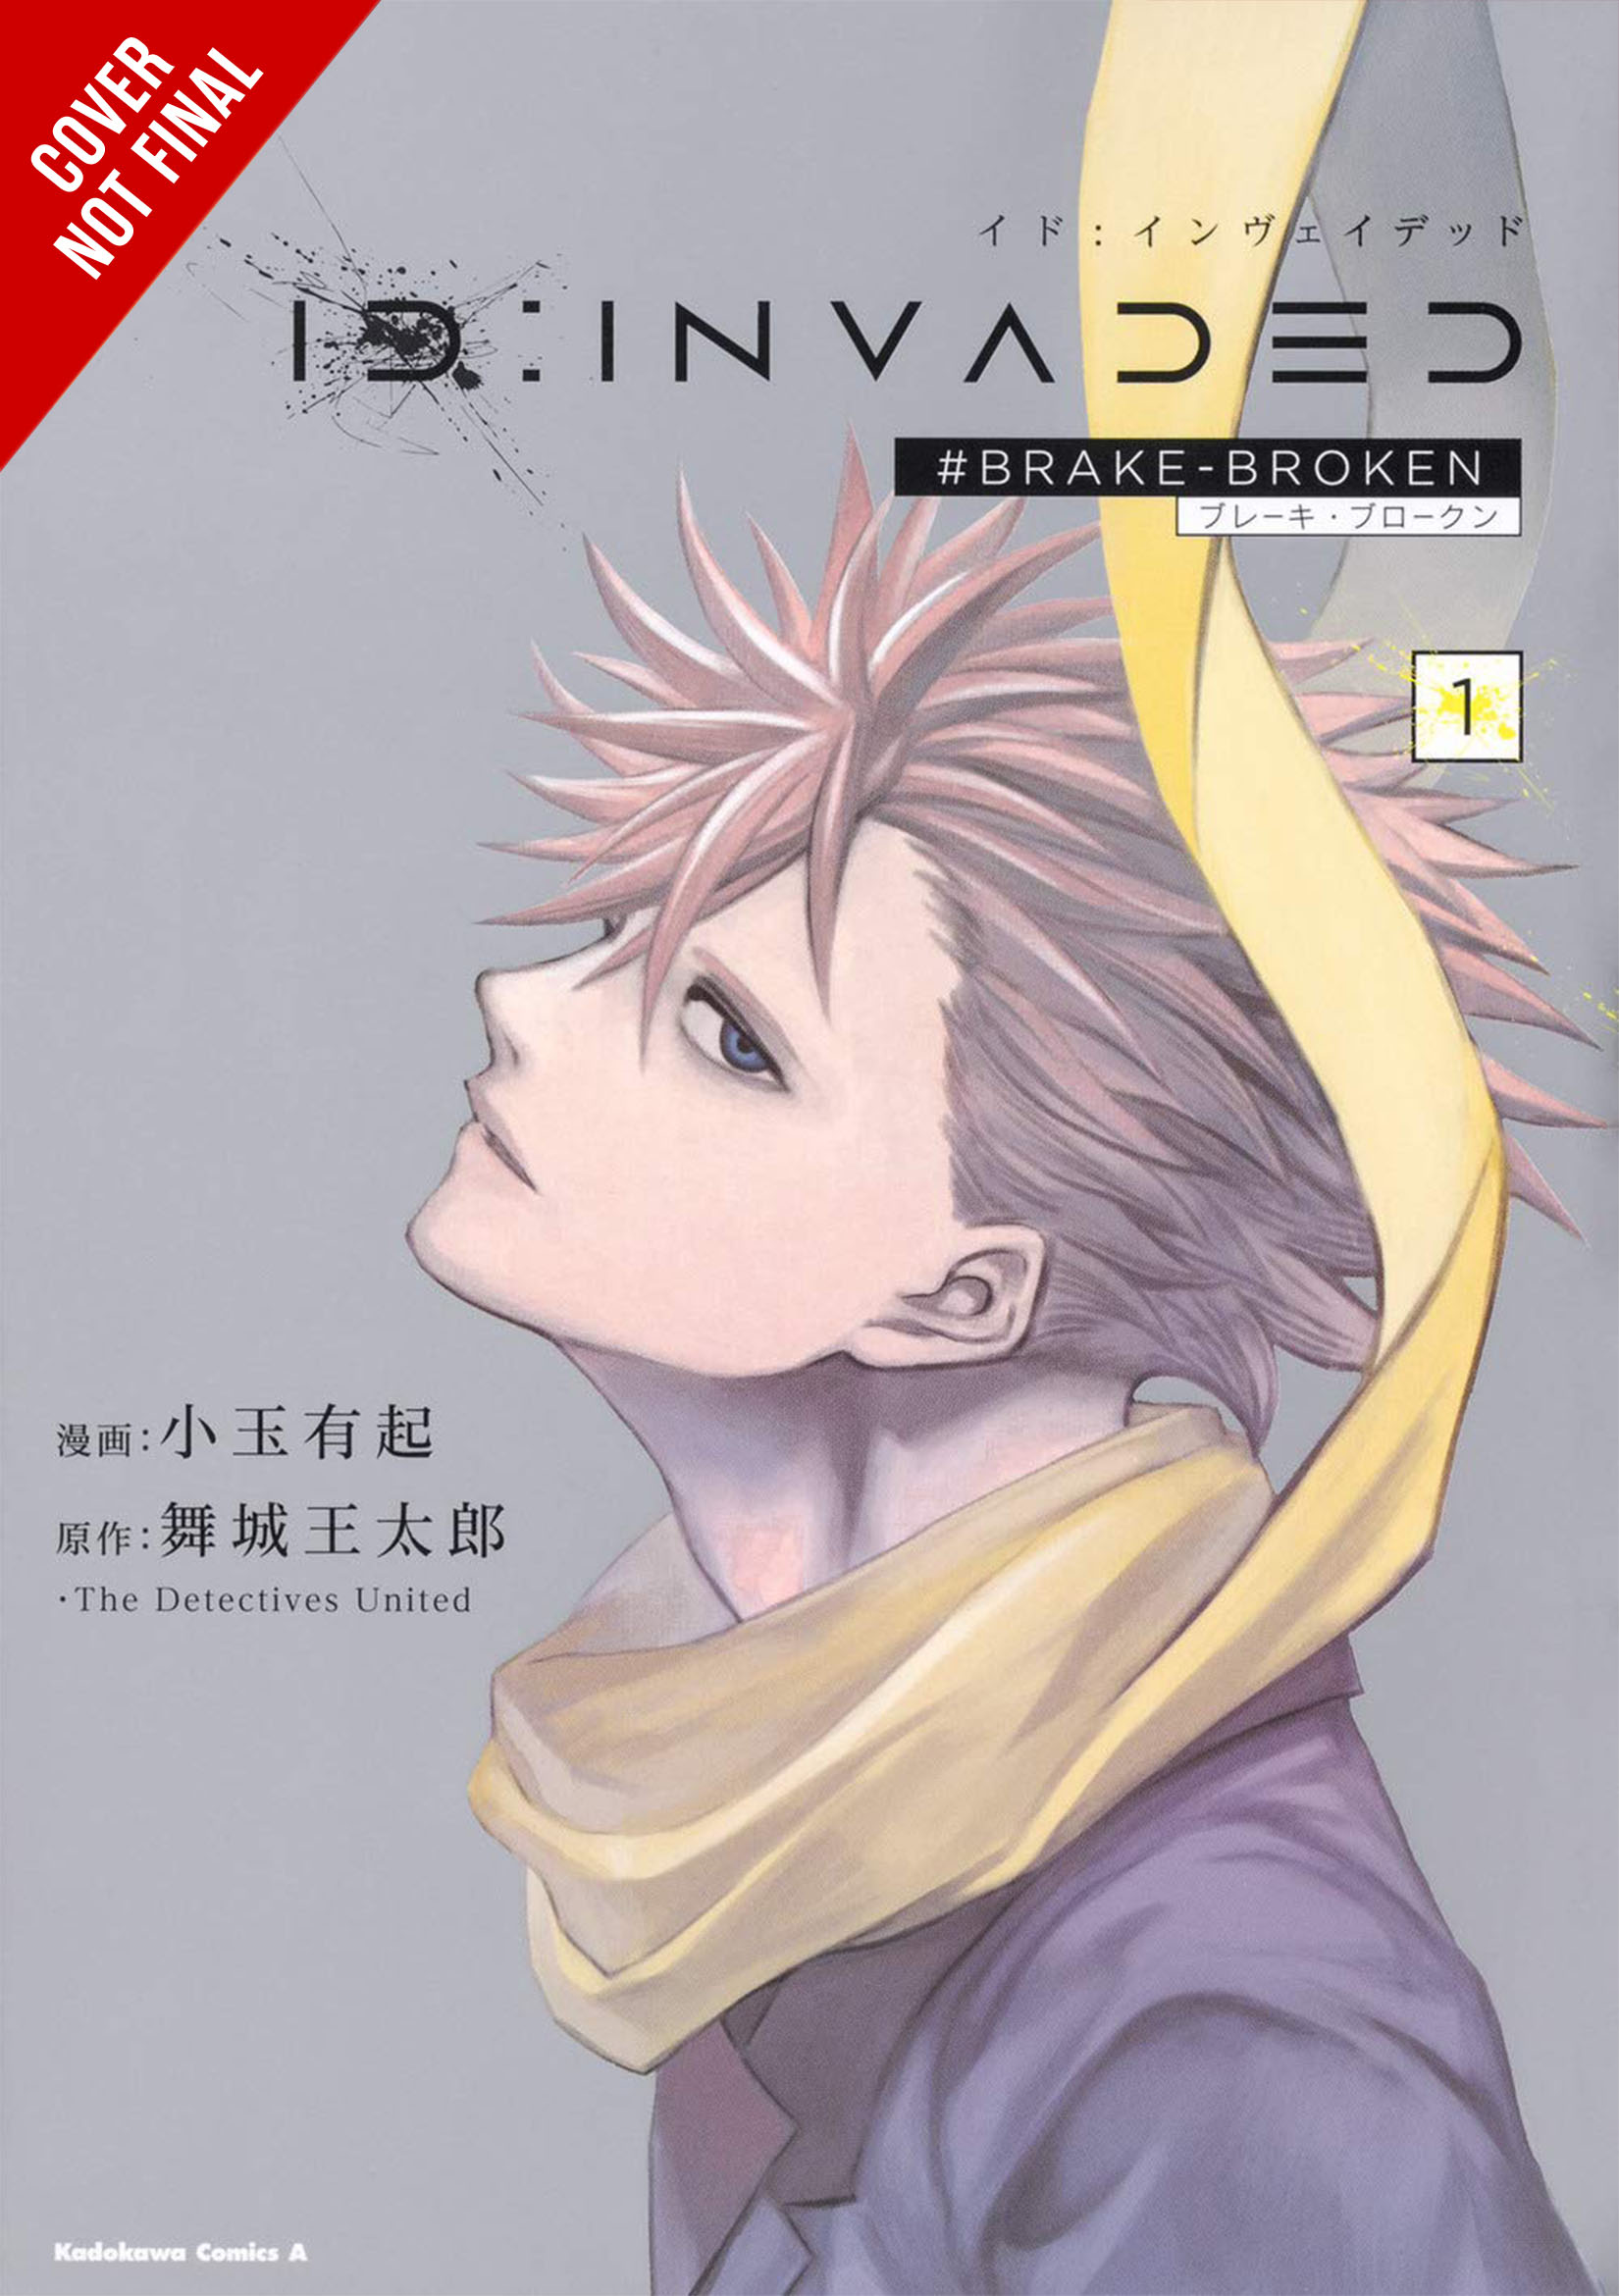 Sword Art Online Progressive Transient Barcarolle Manga Volume 1